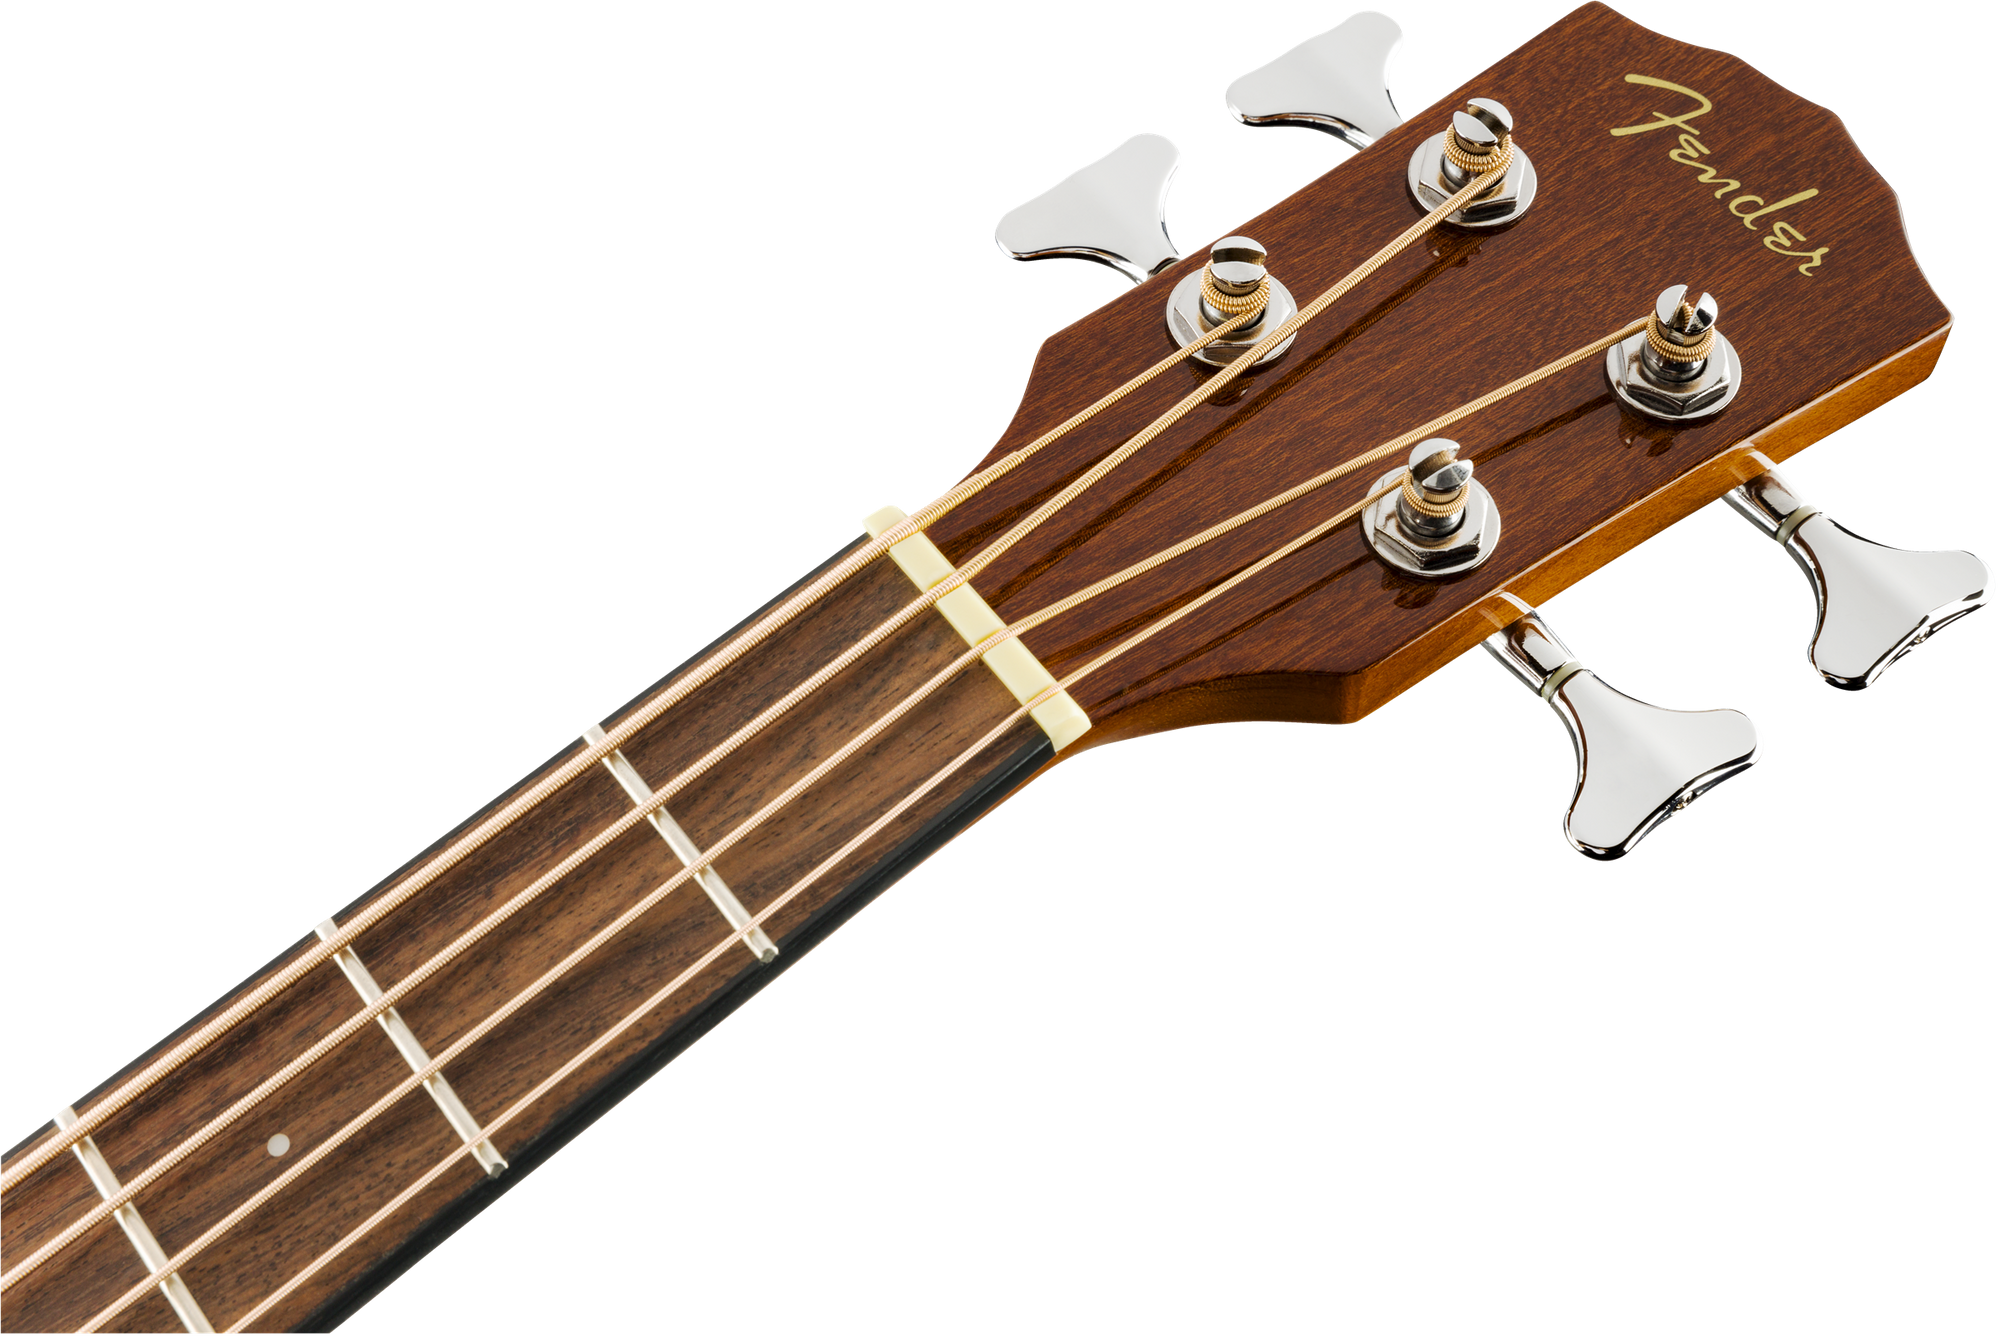 CB-60SCE Acoustic Bass, Laurel Fingerboard, Natural